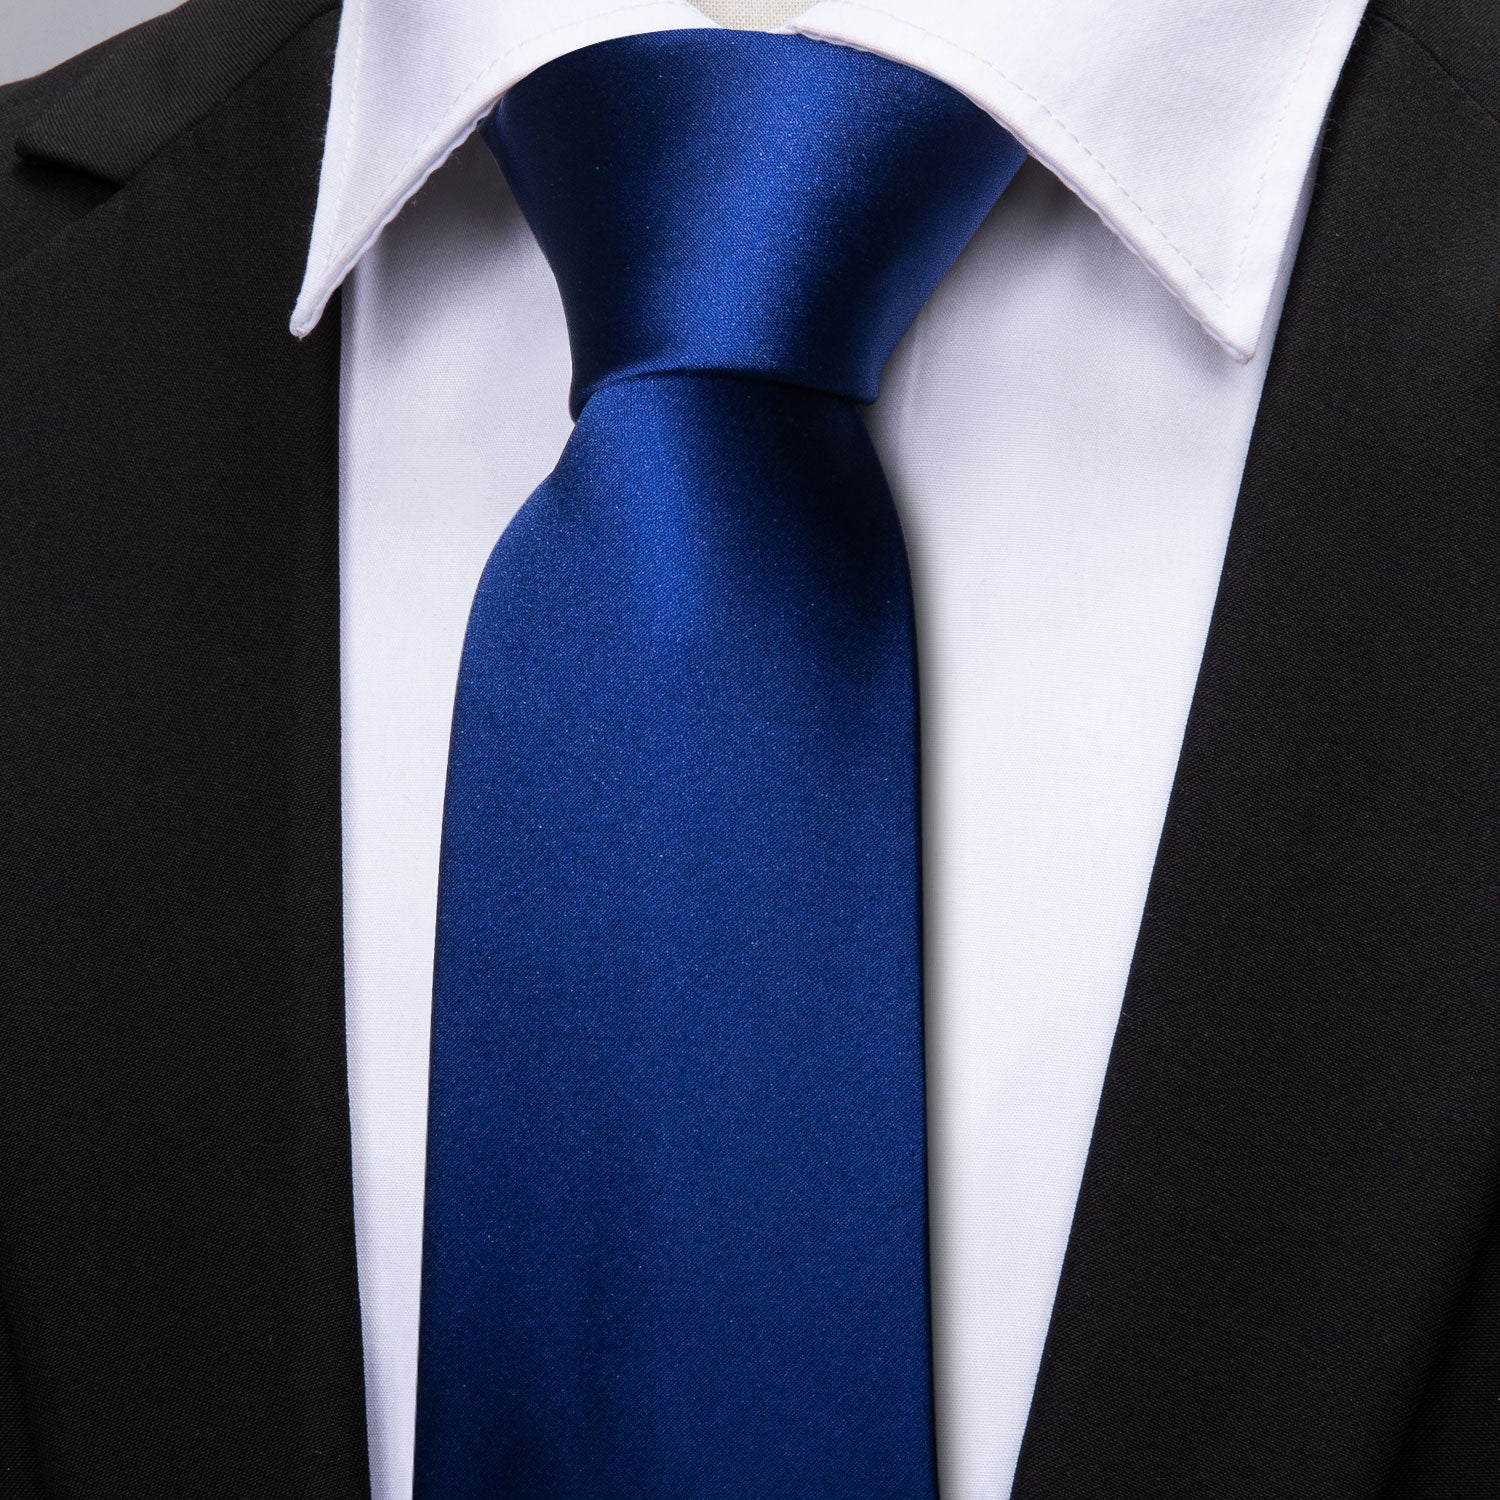 Blue Solid Tie Hanky Cufflinks Set